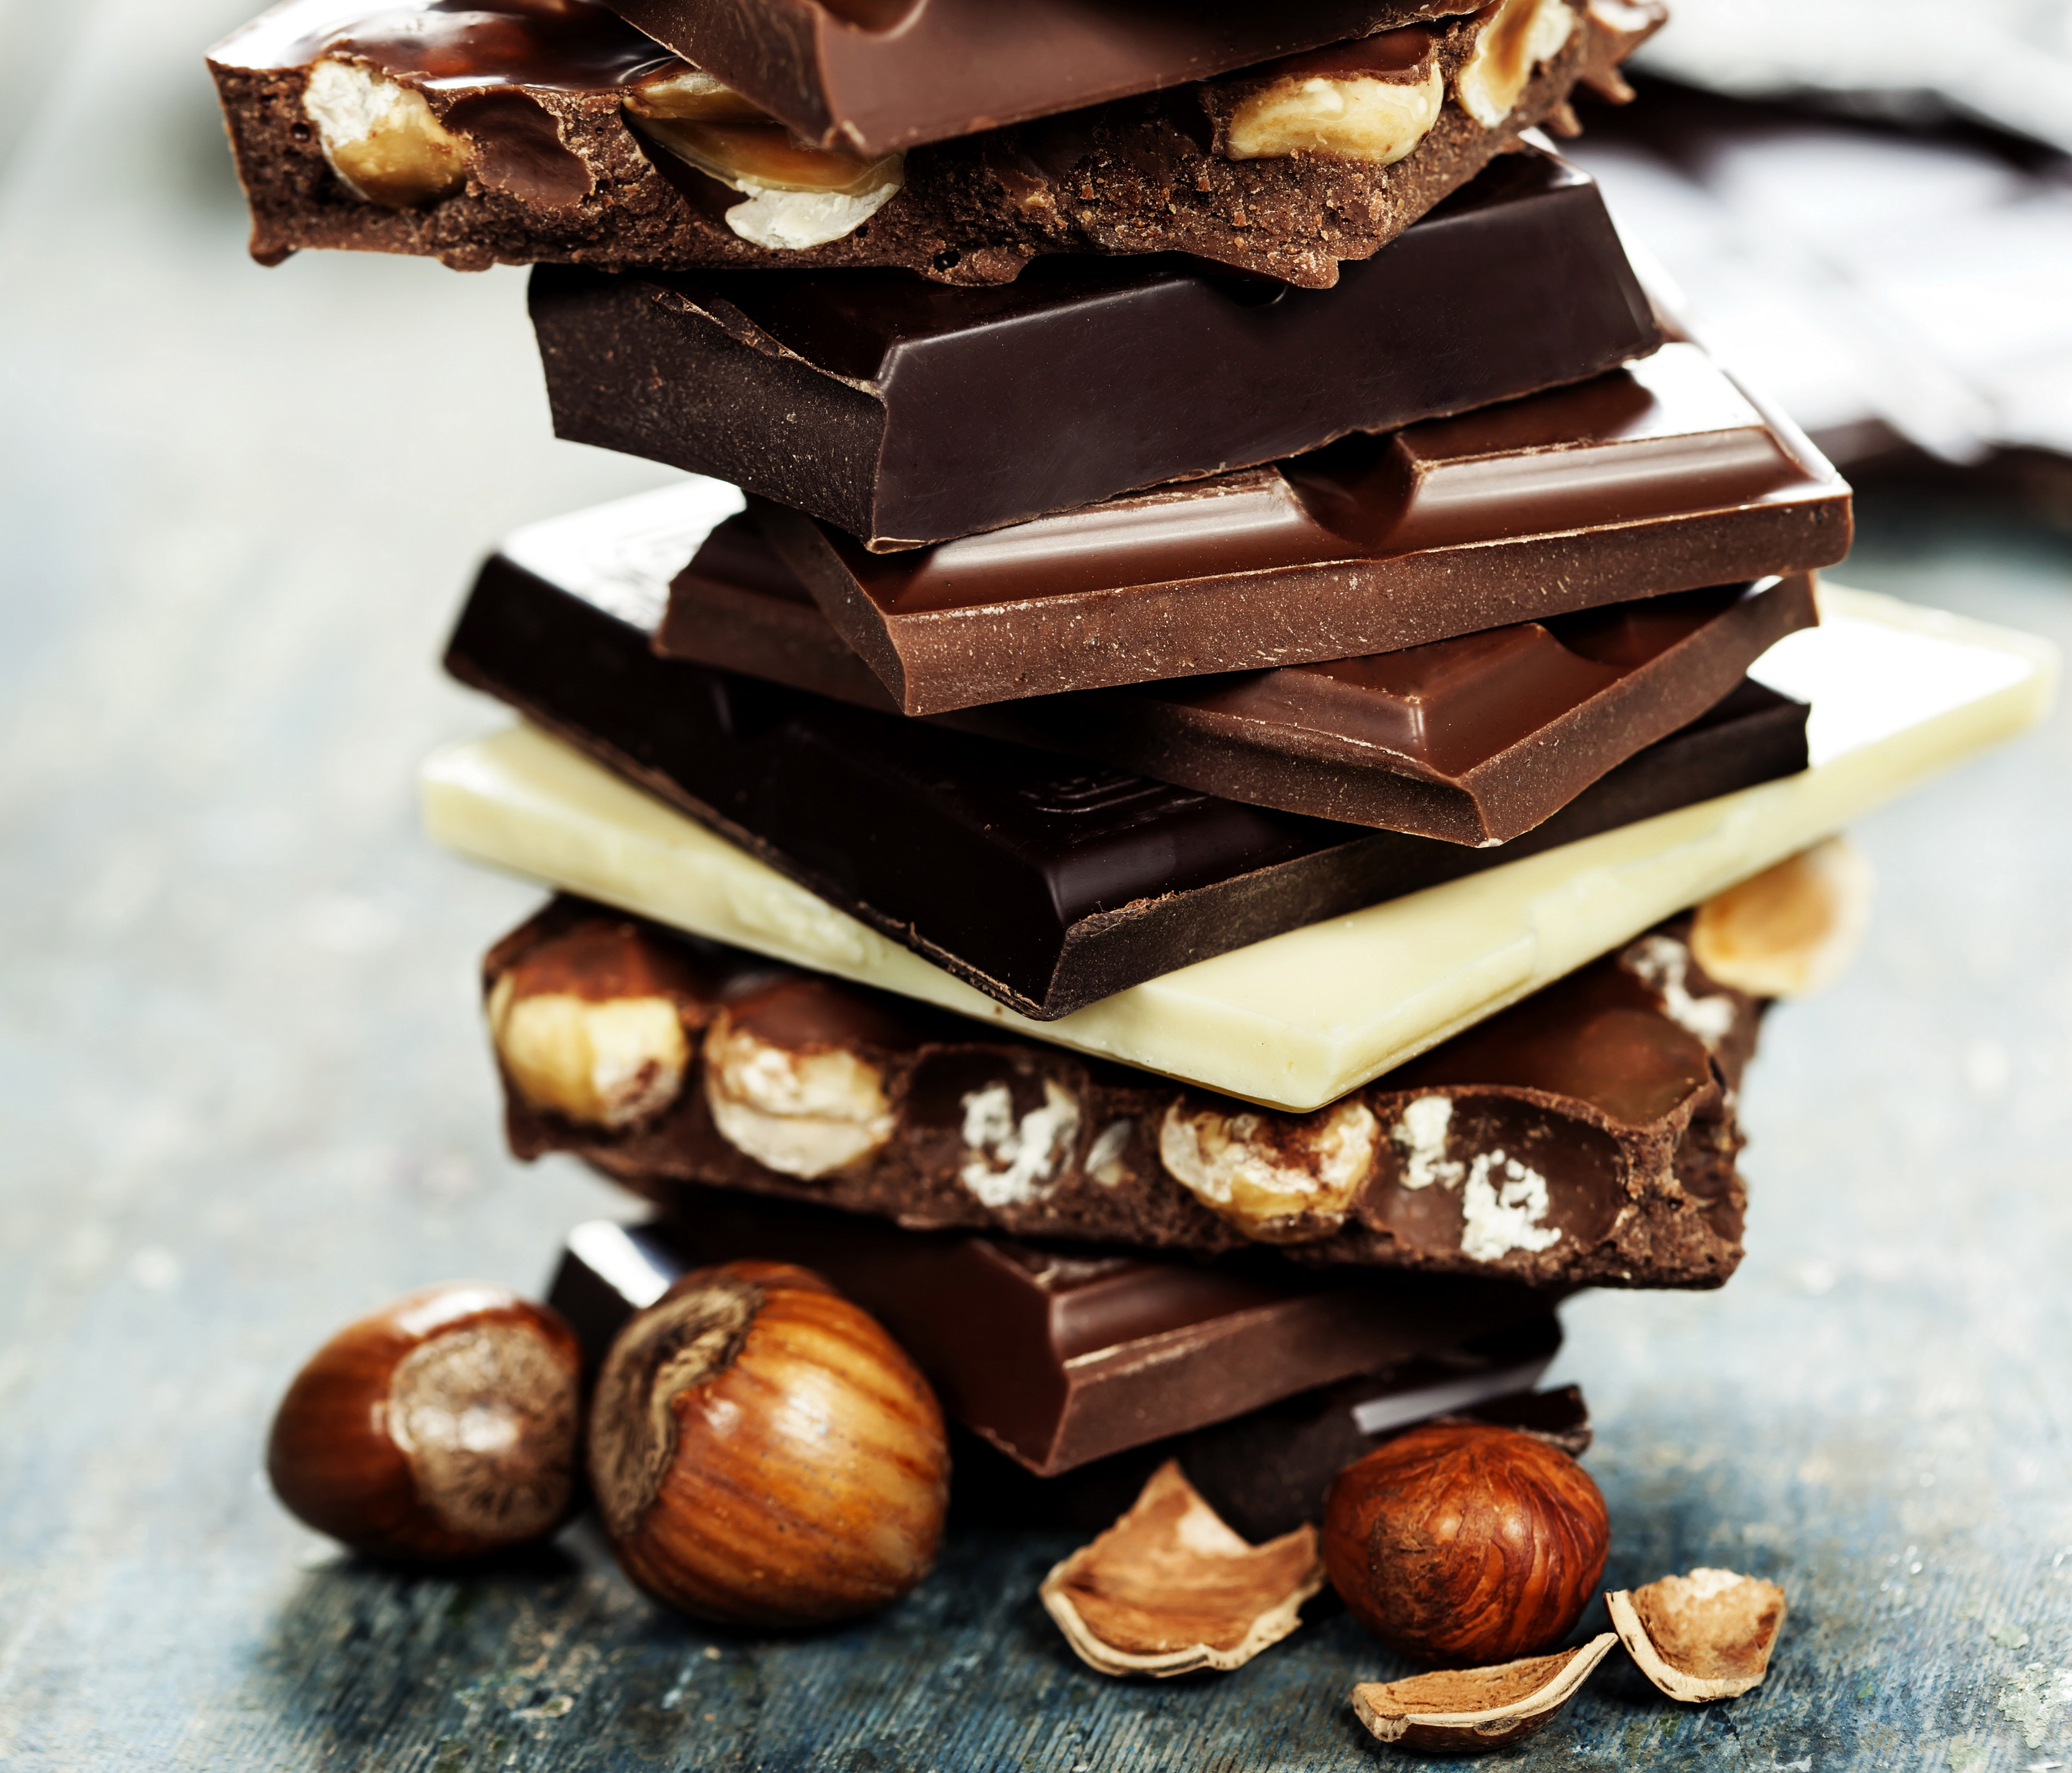 Chocolate pictures. Шоколад с орехами. Шоколадка с орехами. Шоколадка с орешками. Разные шоколадки.